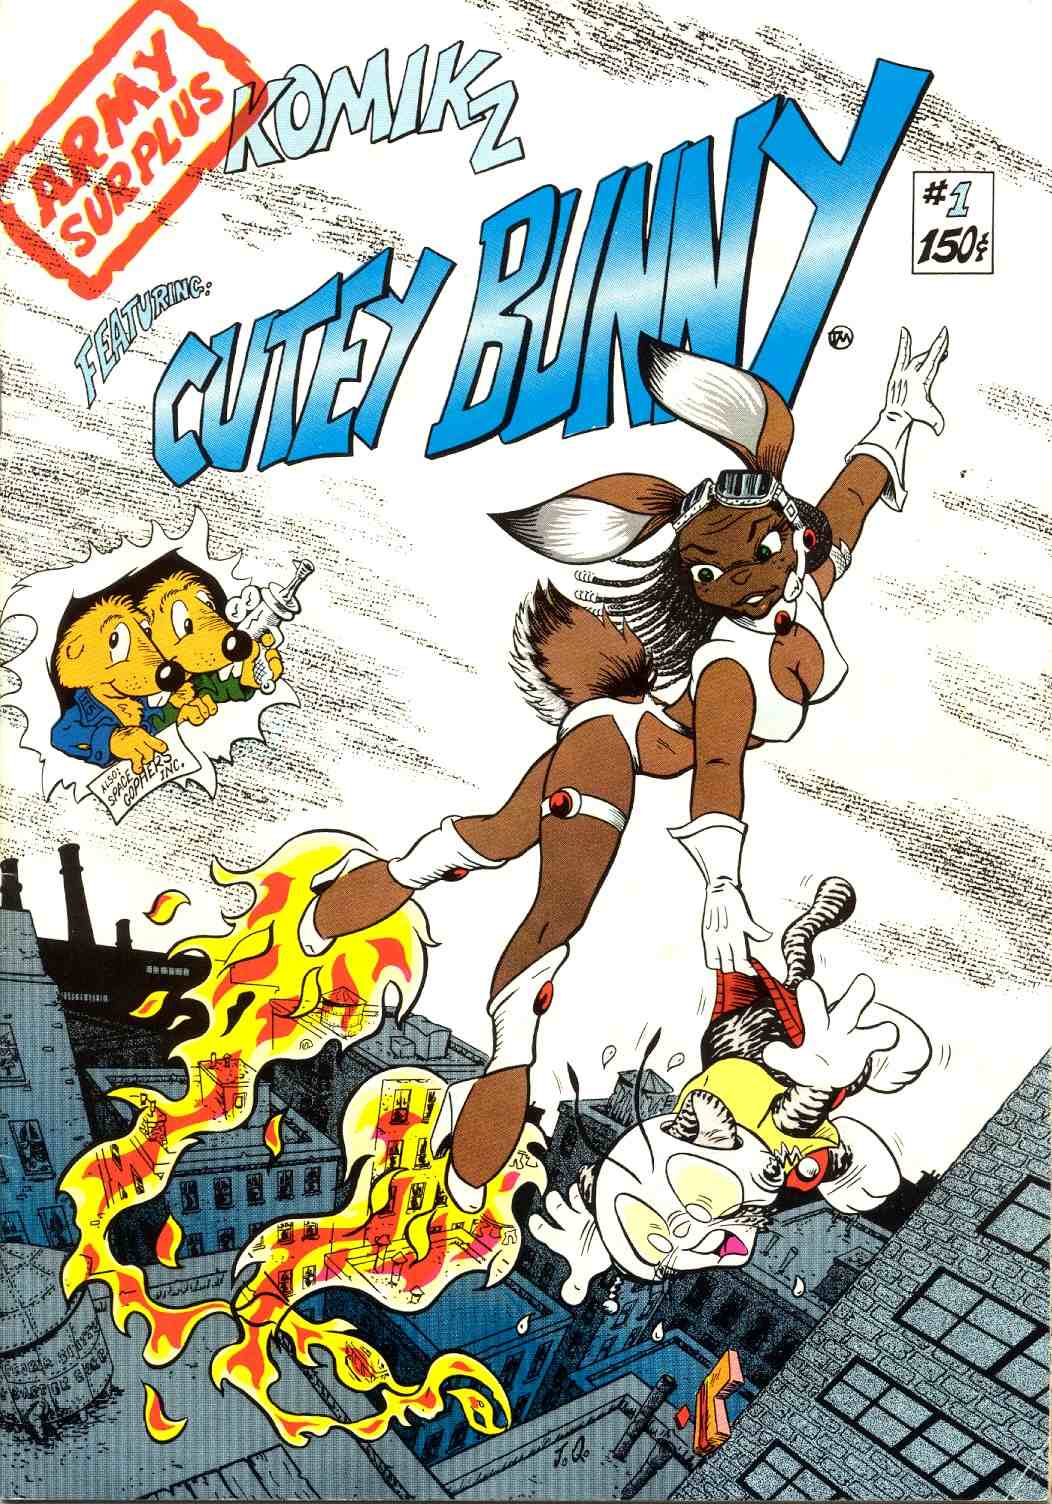 Read online Army  Surplus Komikz Featuring: Cutey Bunny comic -  Issue #1 - 1